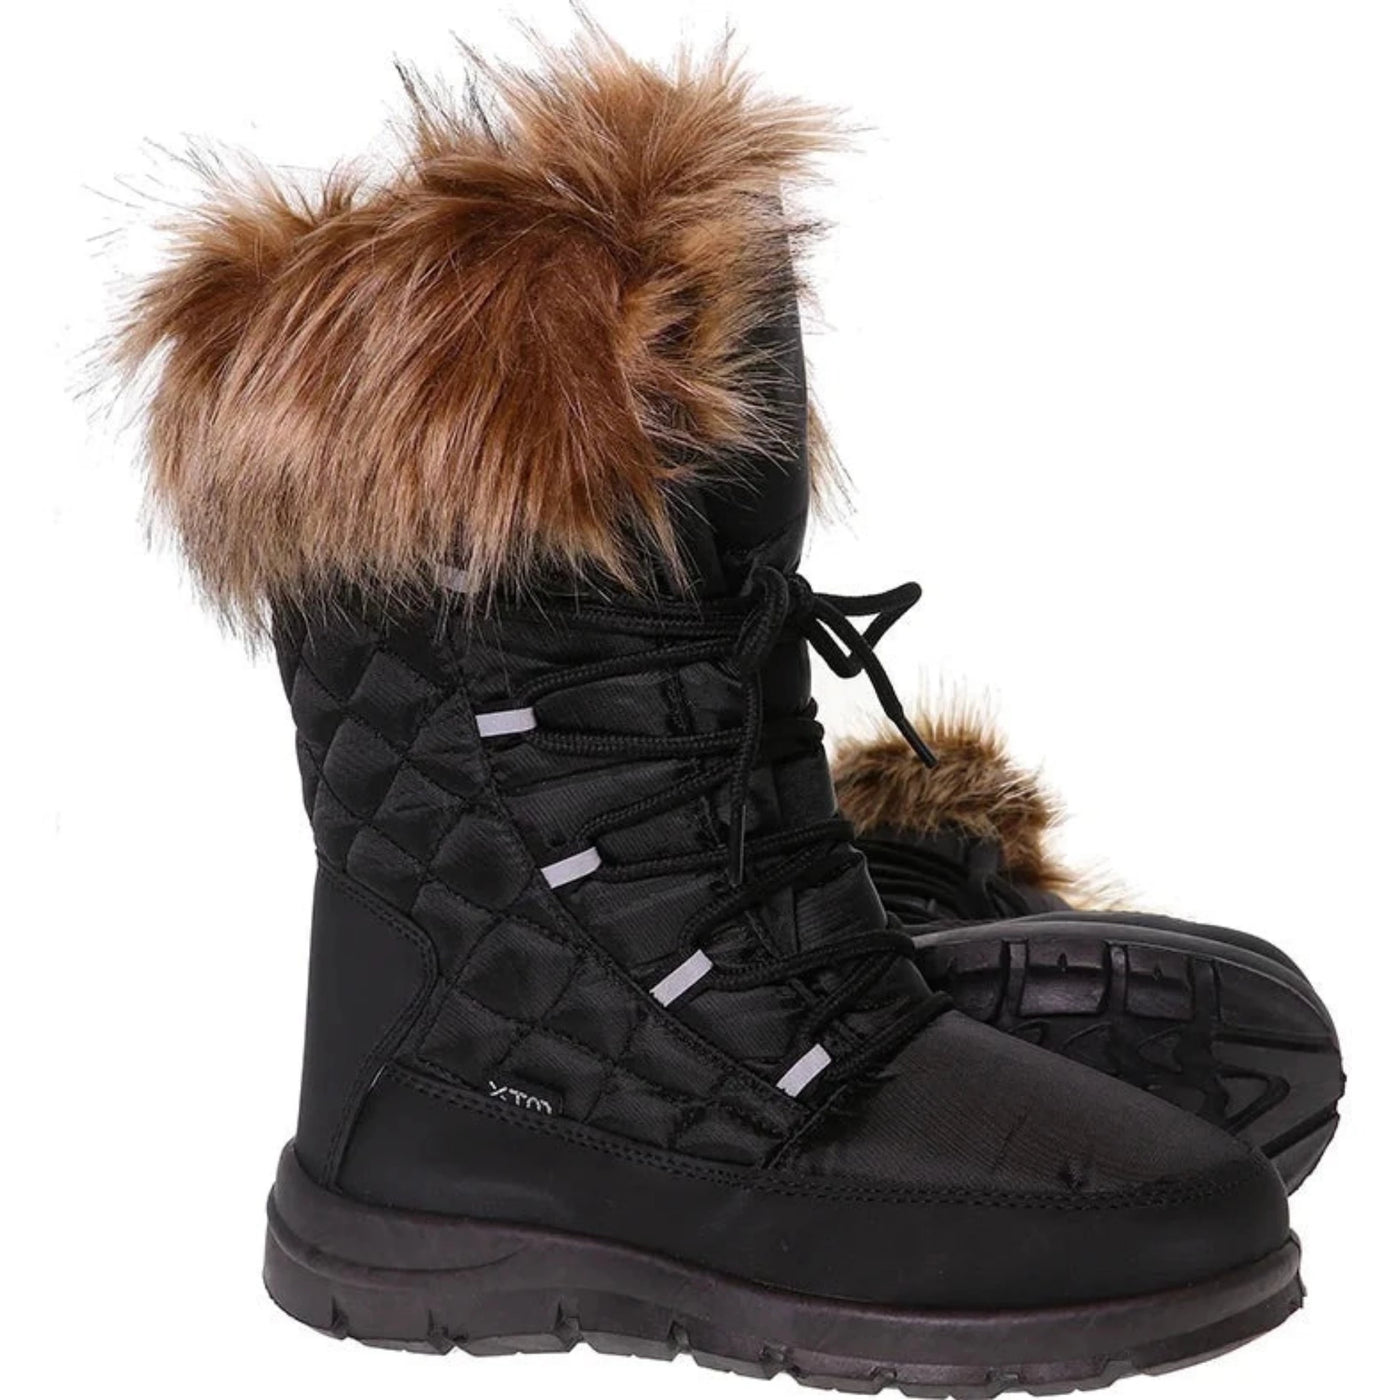 XTM Women's Inessa II Snow Boots - Black